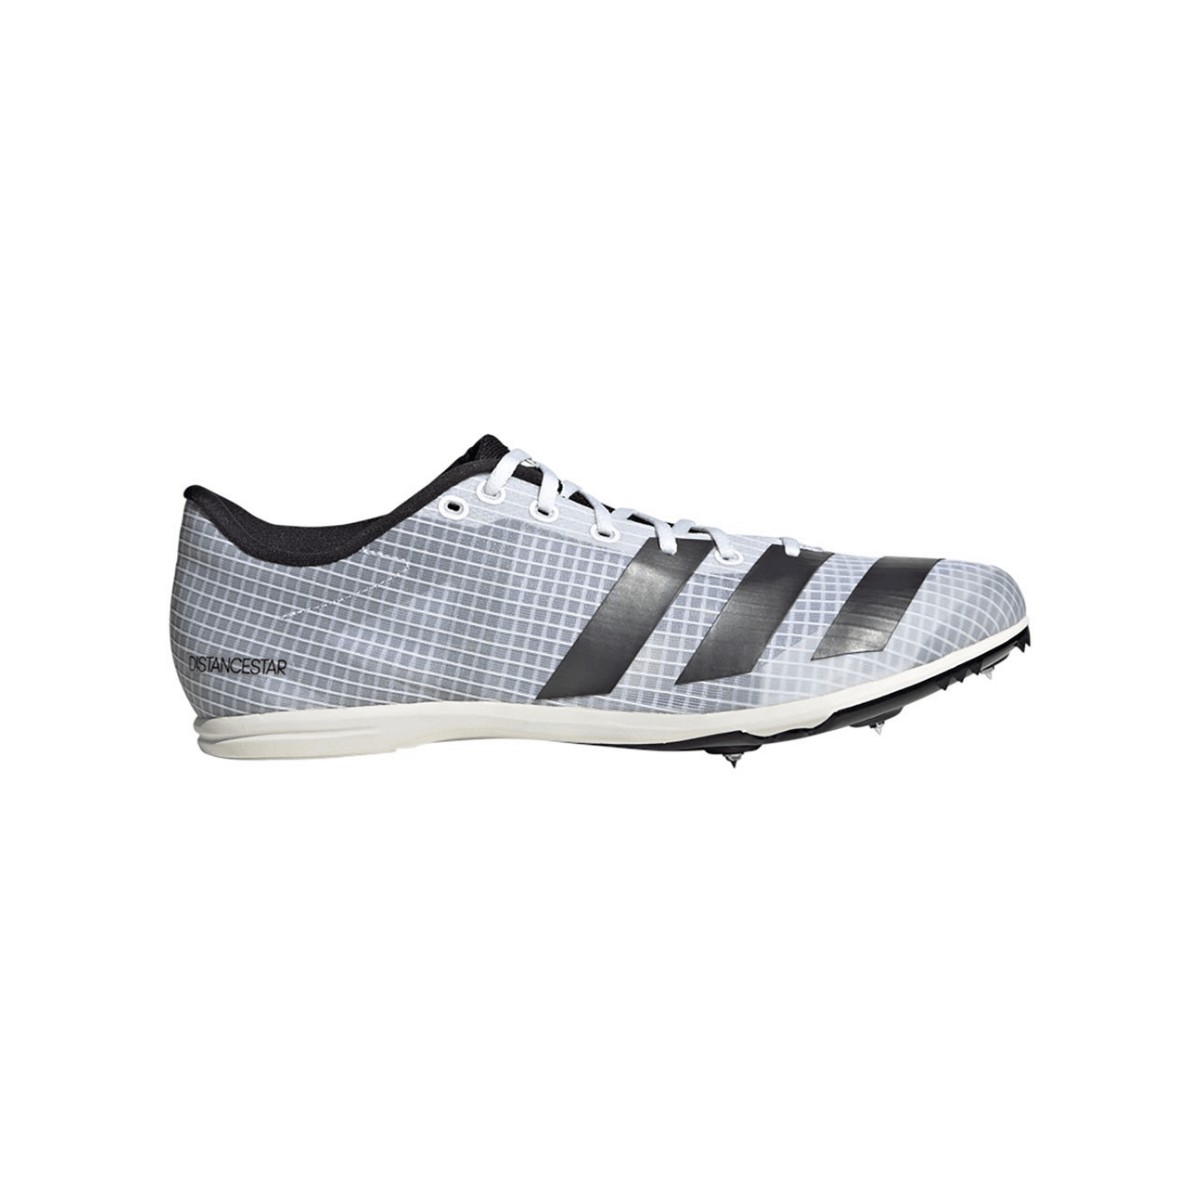 Adidas Distancestar Shoes Gray Black AW22, Size UK 6.5